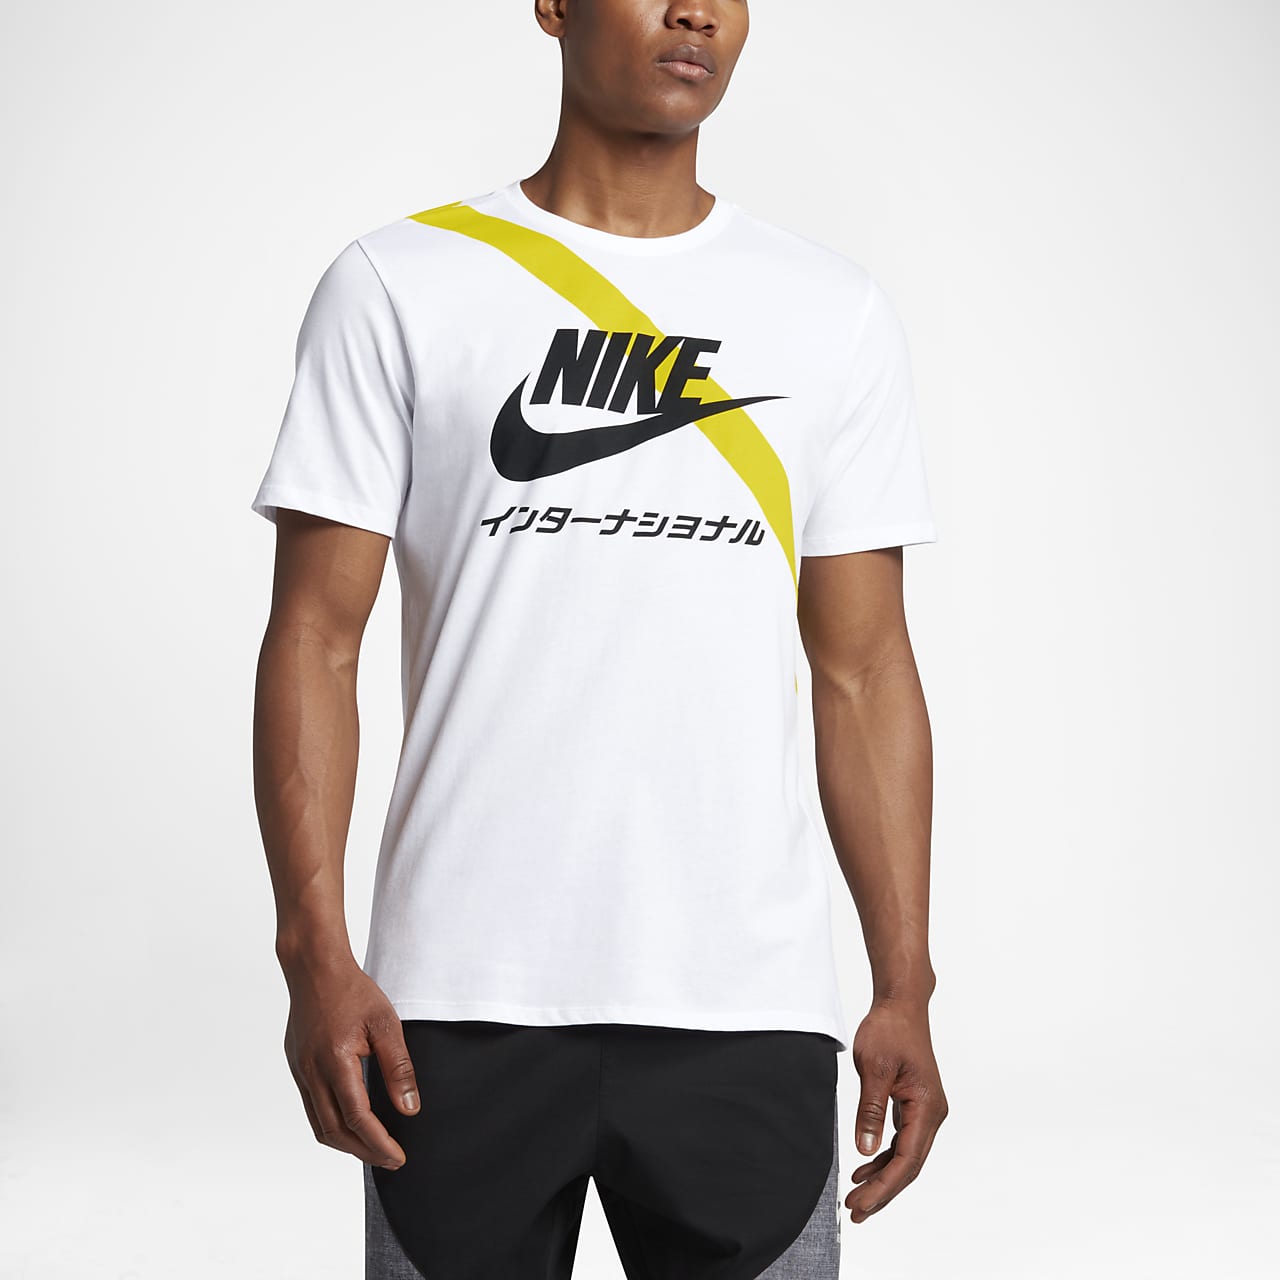 Dynamics Jurassic Park upside down Nike International Men's T-Shirt. Nike ID